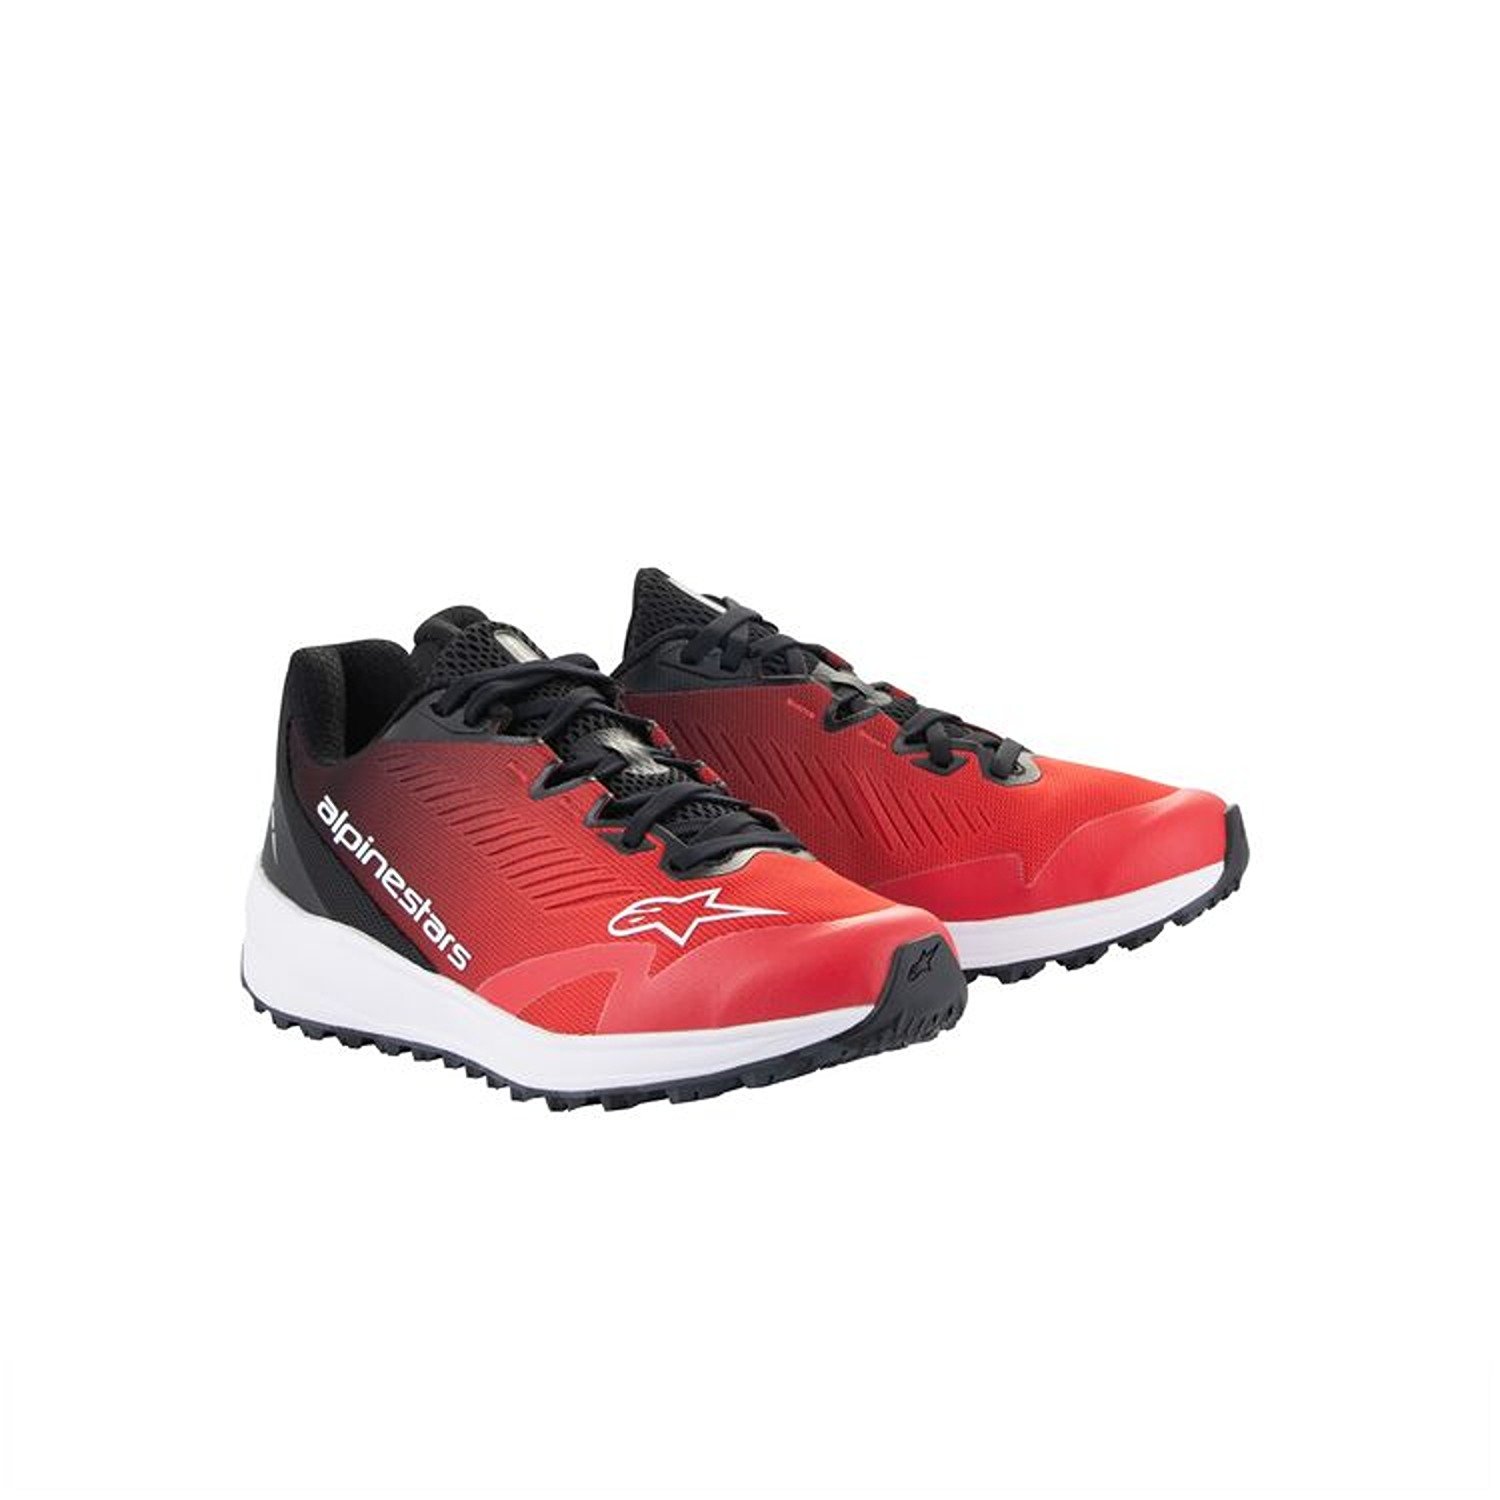 Image of Alpinestars Meta Road V2 Shoes Red Black White Talla US 7